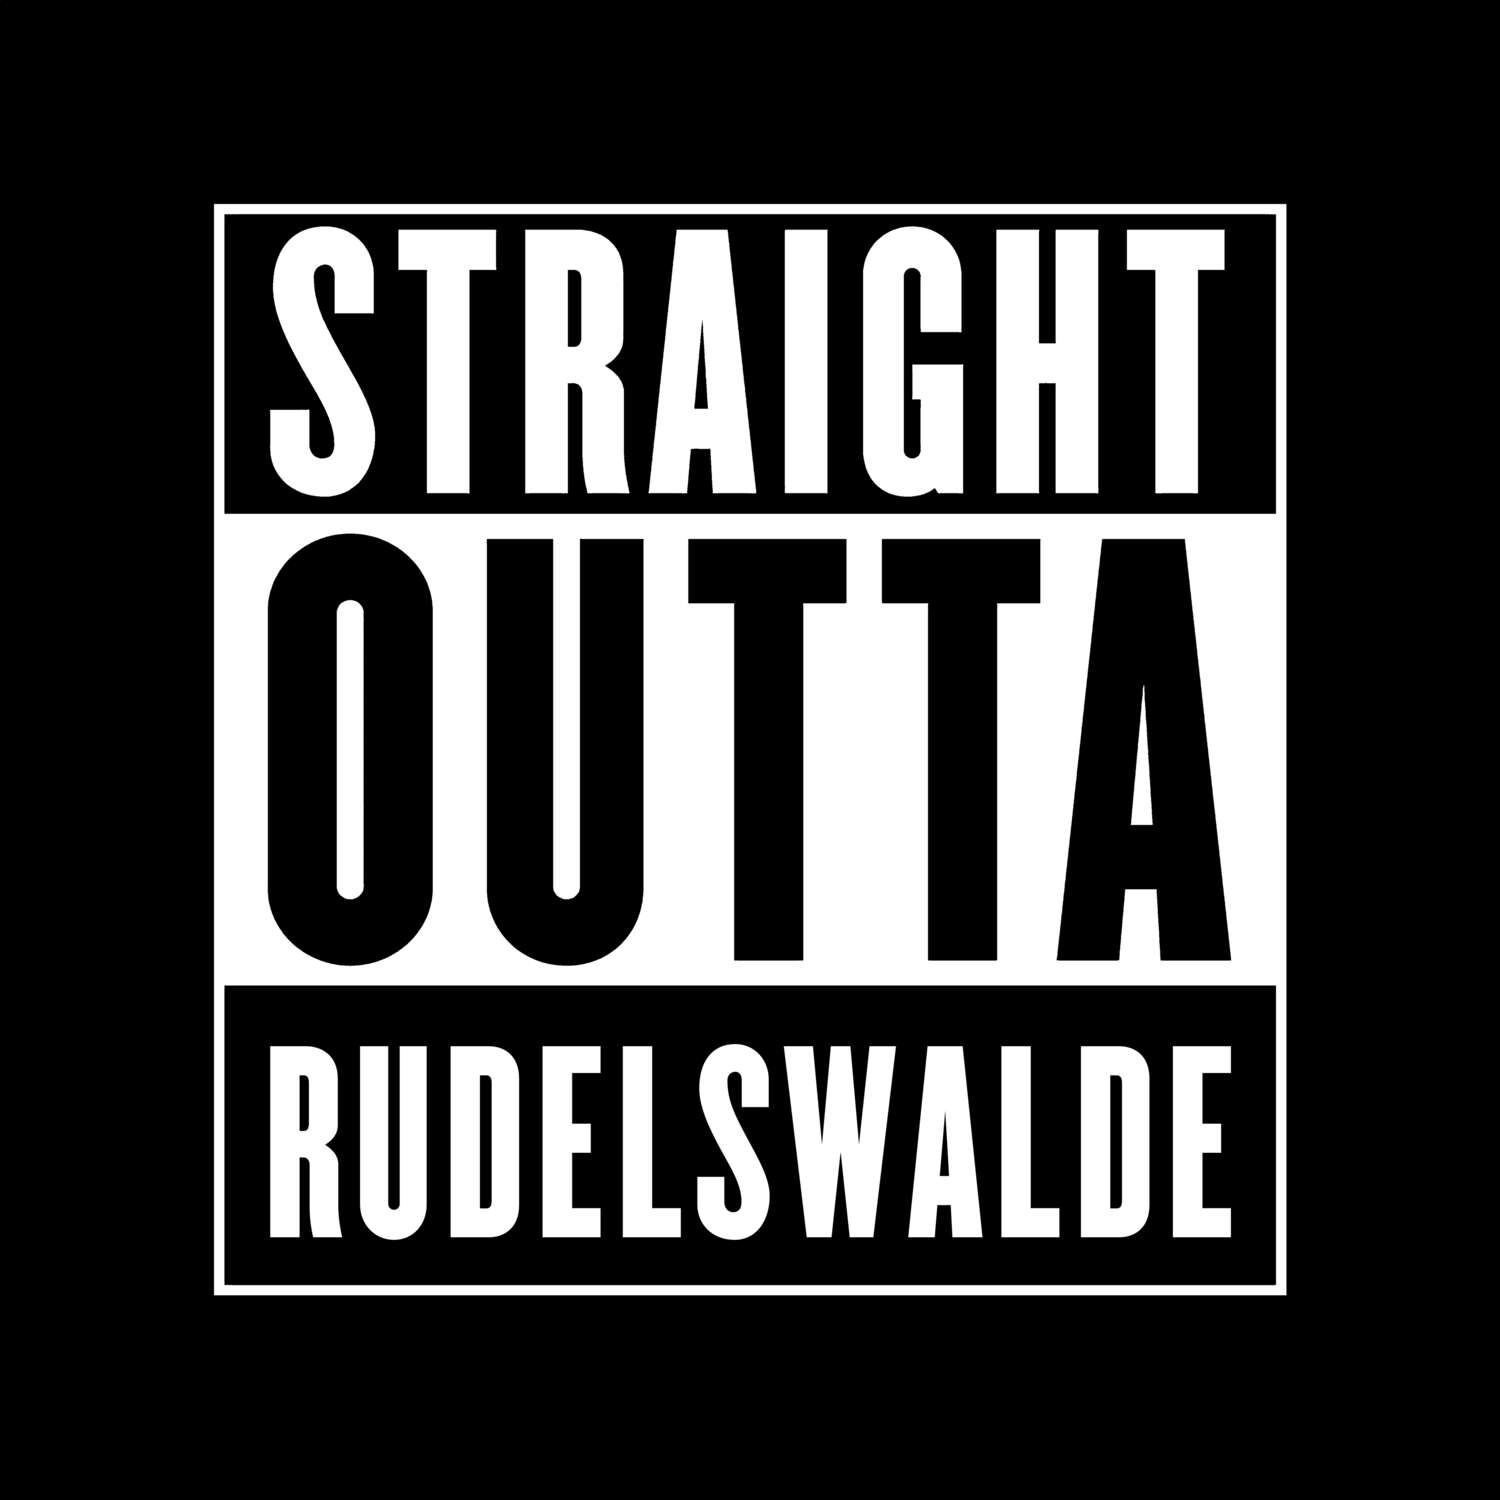 Rudelswalde T-Shirt »Straight Outta«